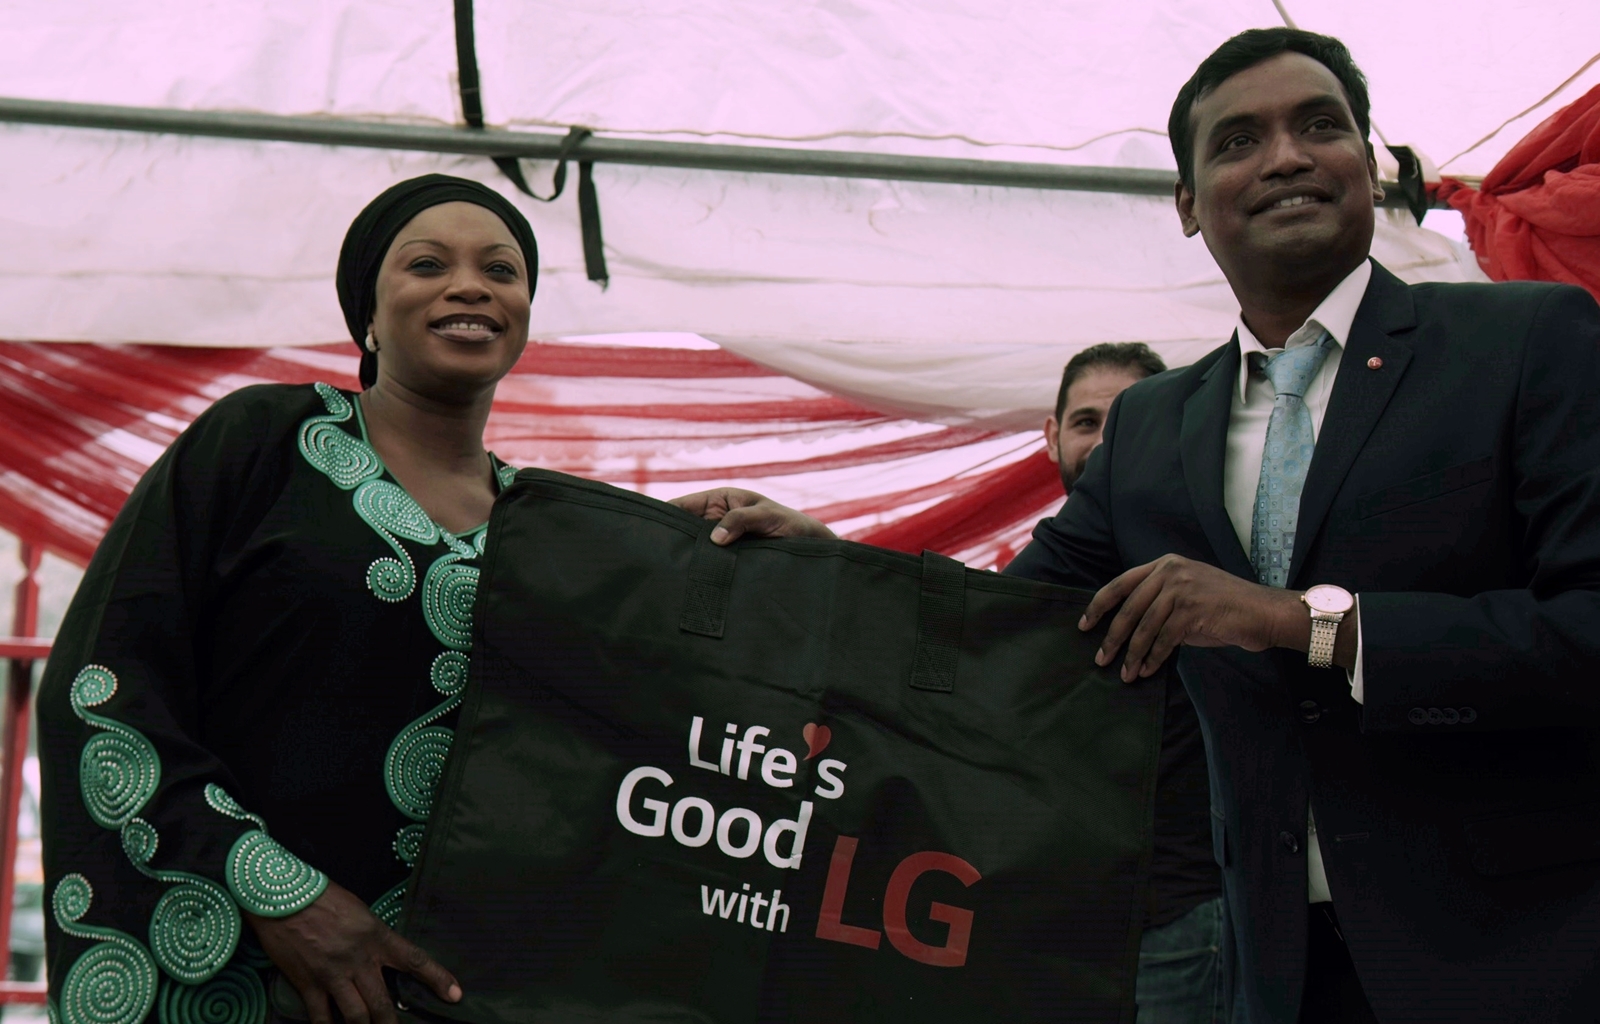  LG전자가 25일 나이지리아 카노주(州)에 위치한 LG 브랜드샵의 일부 공간에 무료 세탁방인 ‘라이프스 굿 위드 LG 워시(Life’s Good with LG Wash)’를 열었다. 무료 세탁방 개소식에서 현지 주민에게 세탁 가방을 선물하고 있다.